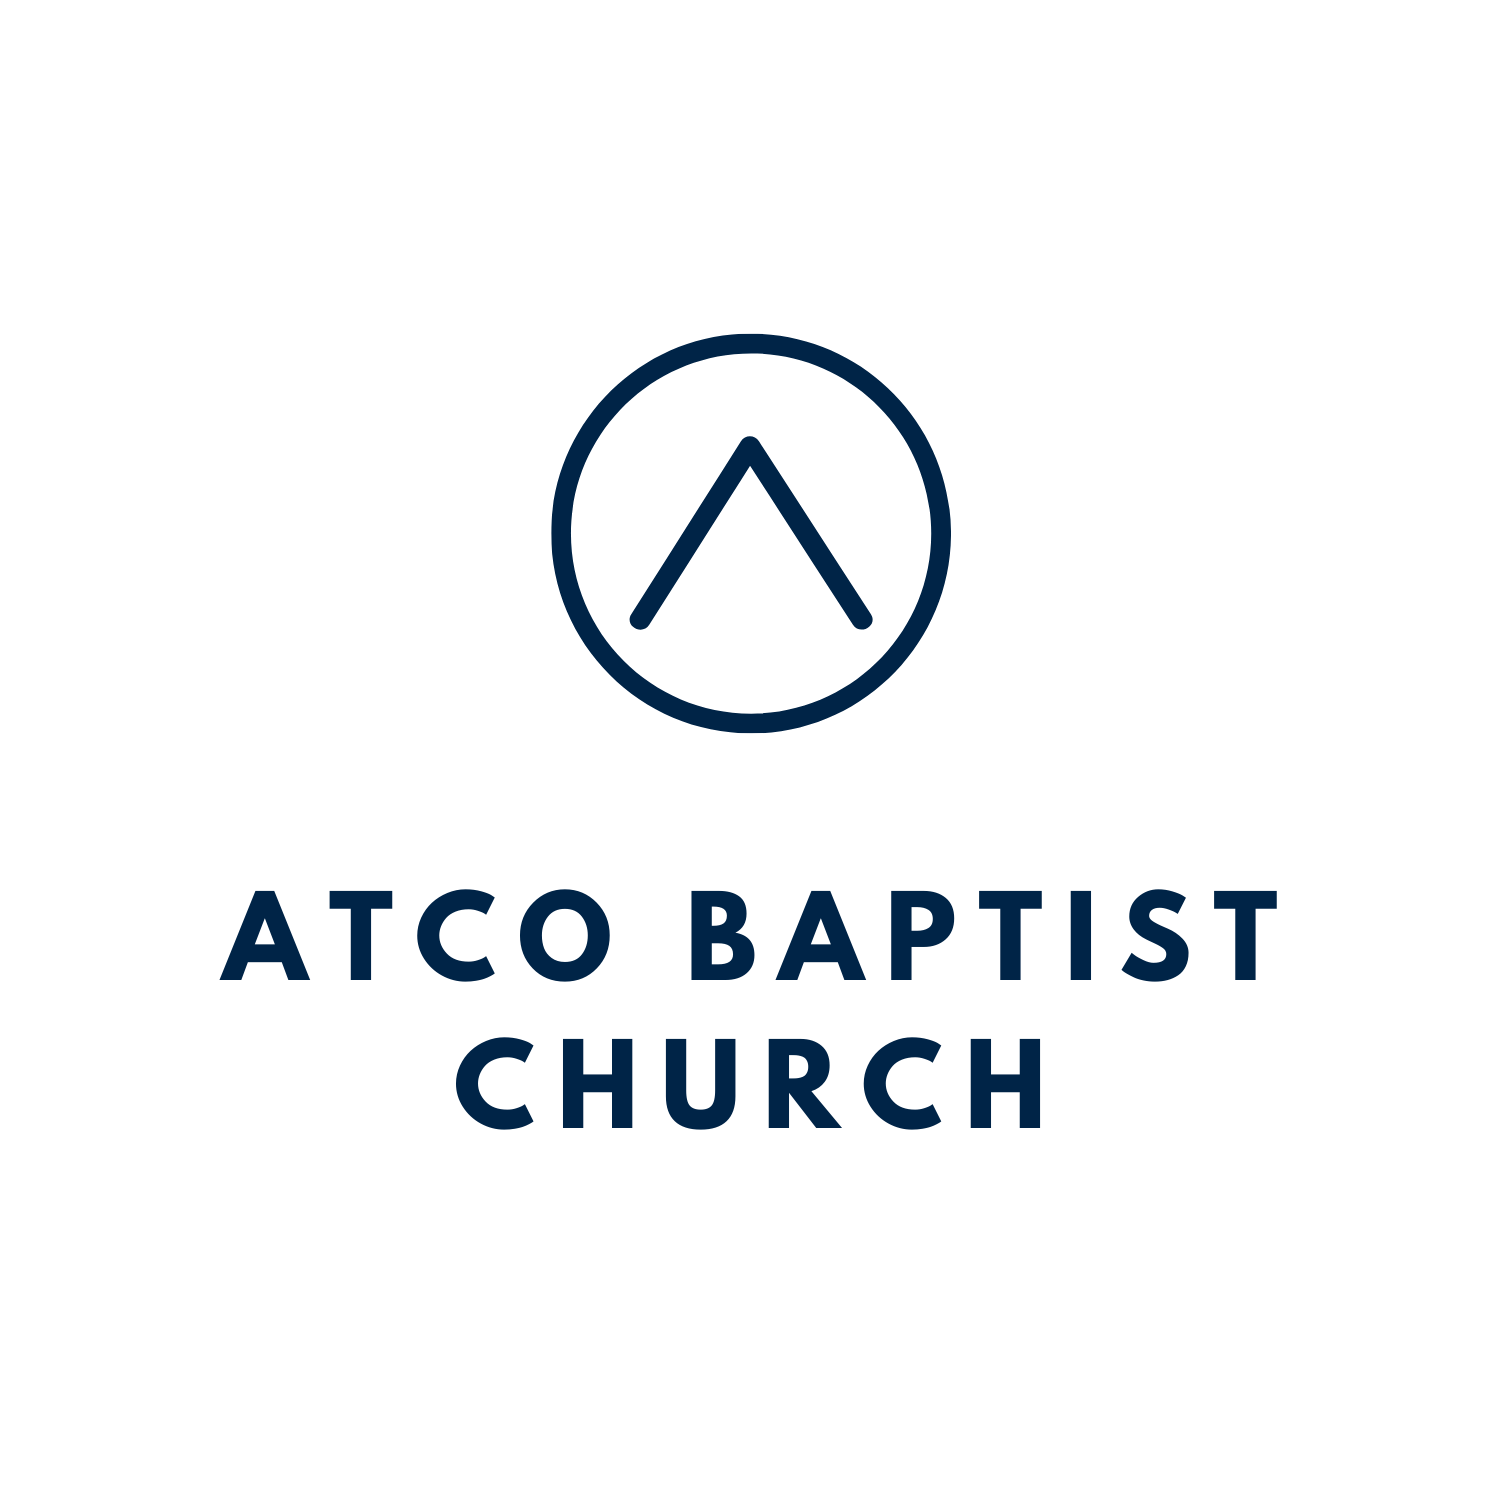 ATCO Baptist Church